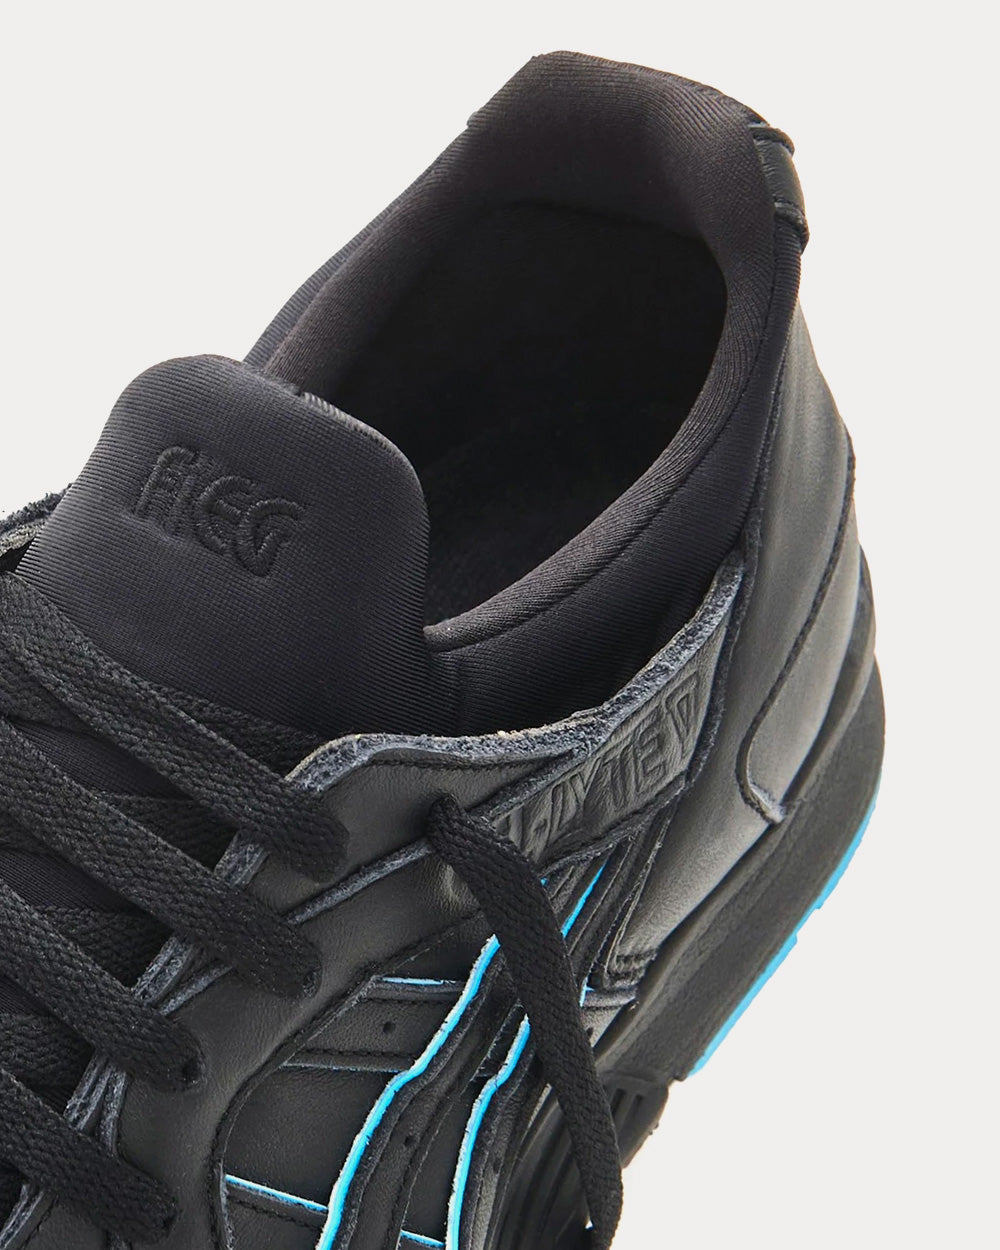 Asics x Kith - Gel-Lyte V Leatherback Black Low Top Sneakers